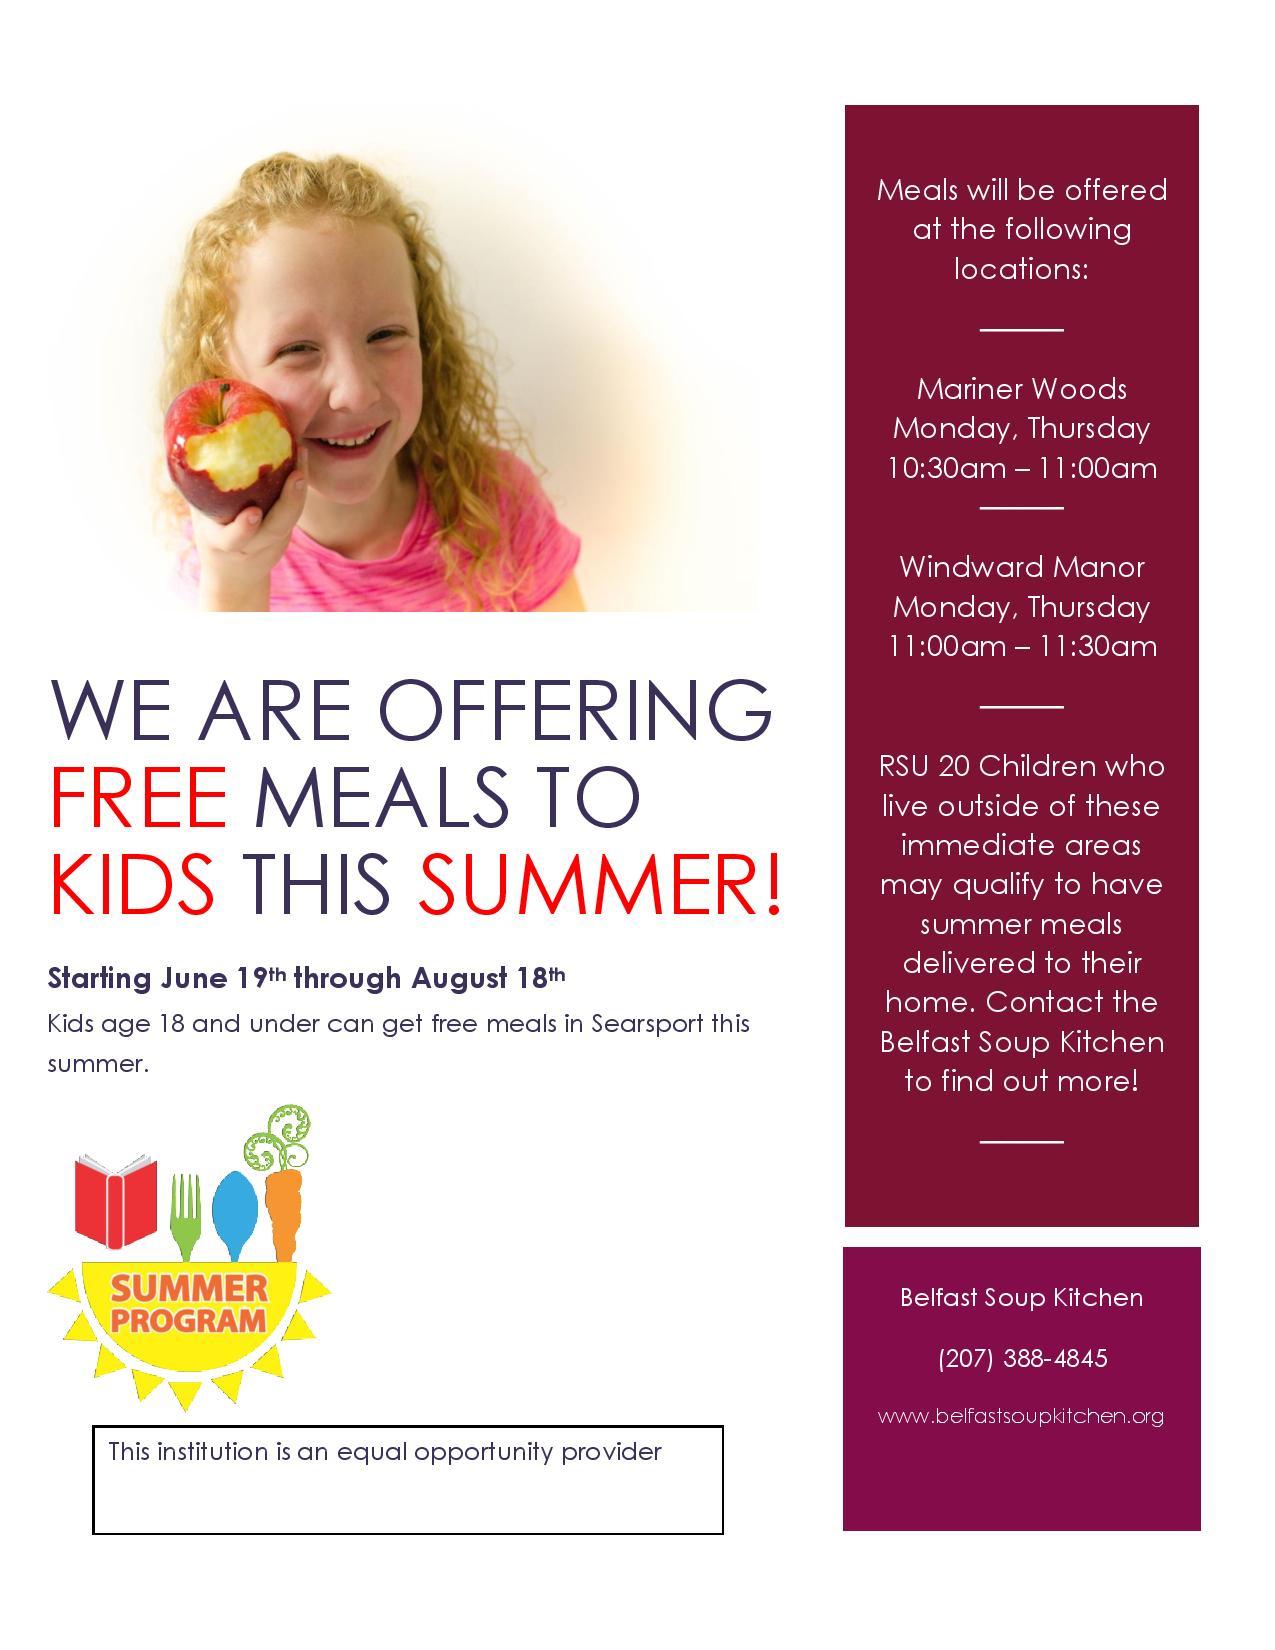 Belfast Soup Kitchen Summer Meals Program for children 18 and under